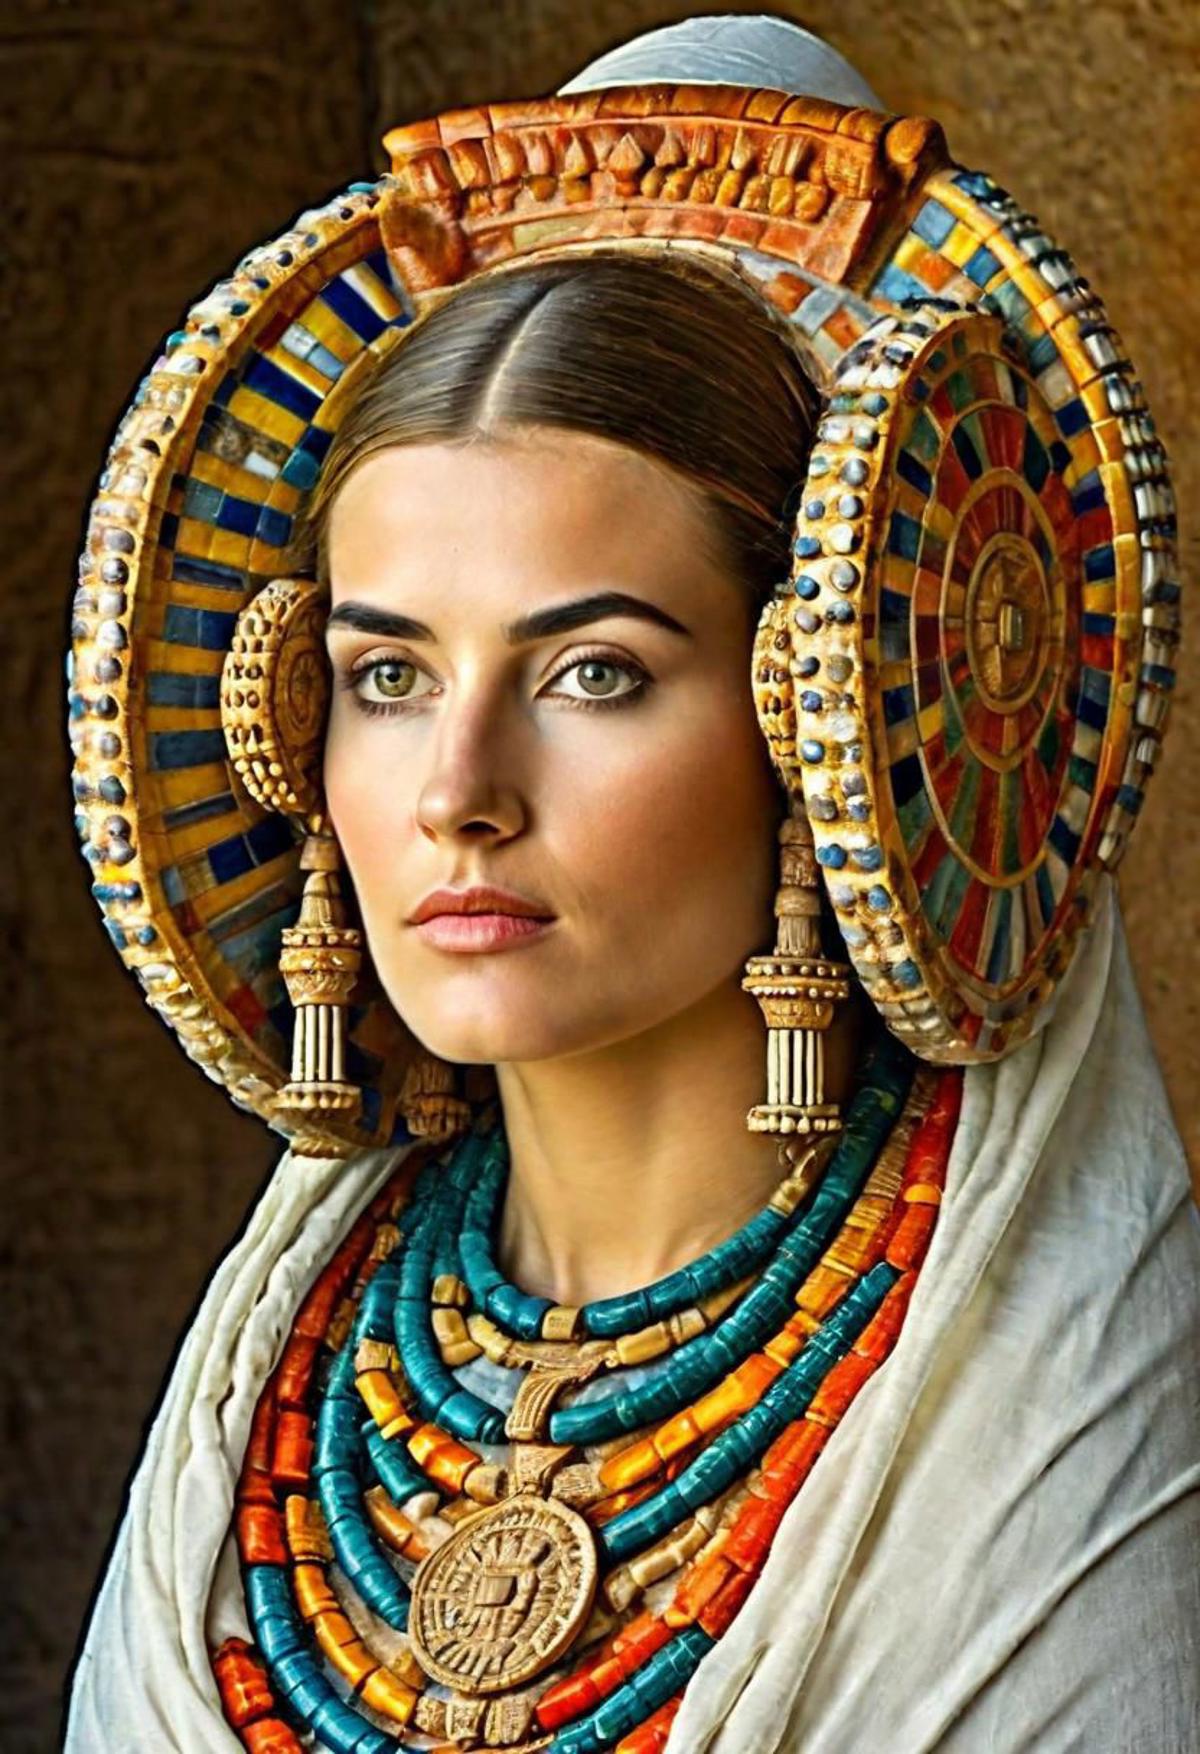 Lady of Elche image by cristianchirita749